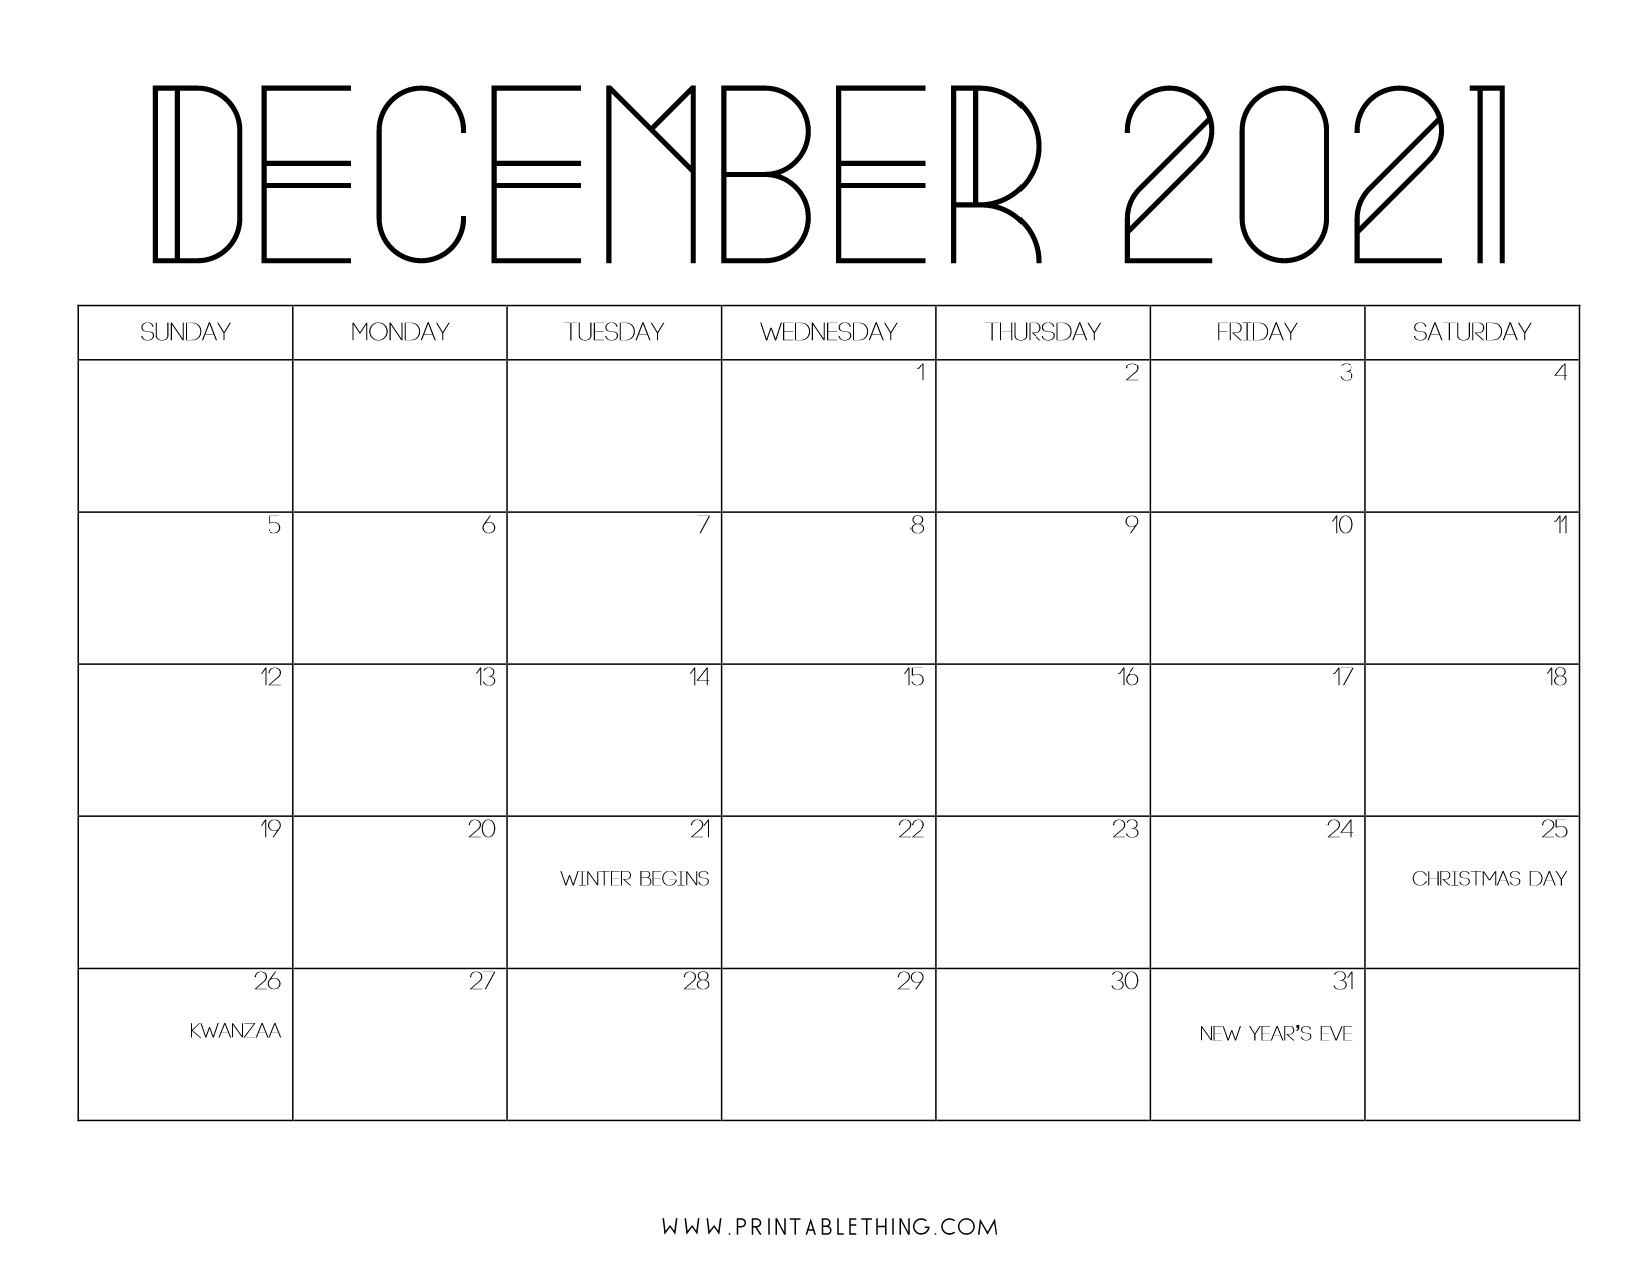 December 2021 Calendar Pdf, December 2021 Calendar Image Print December 2021 Calendar Template